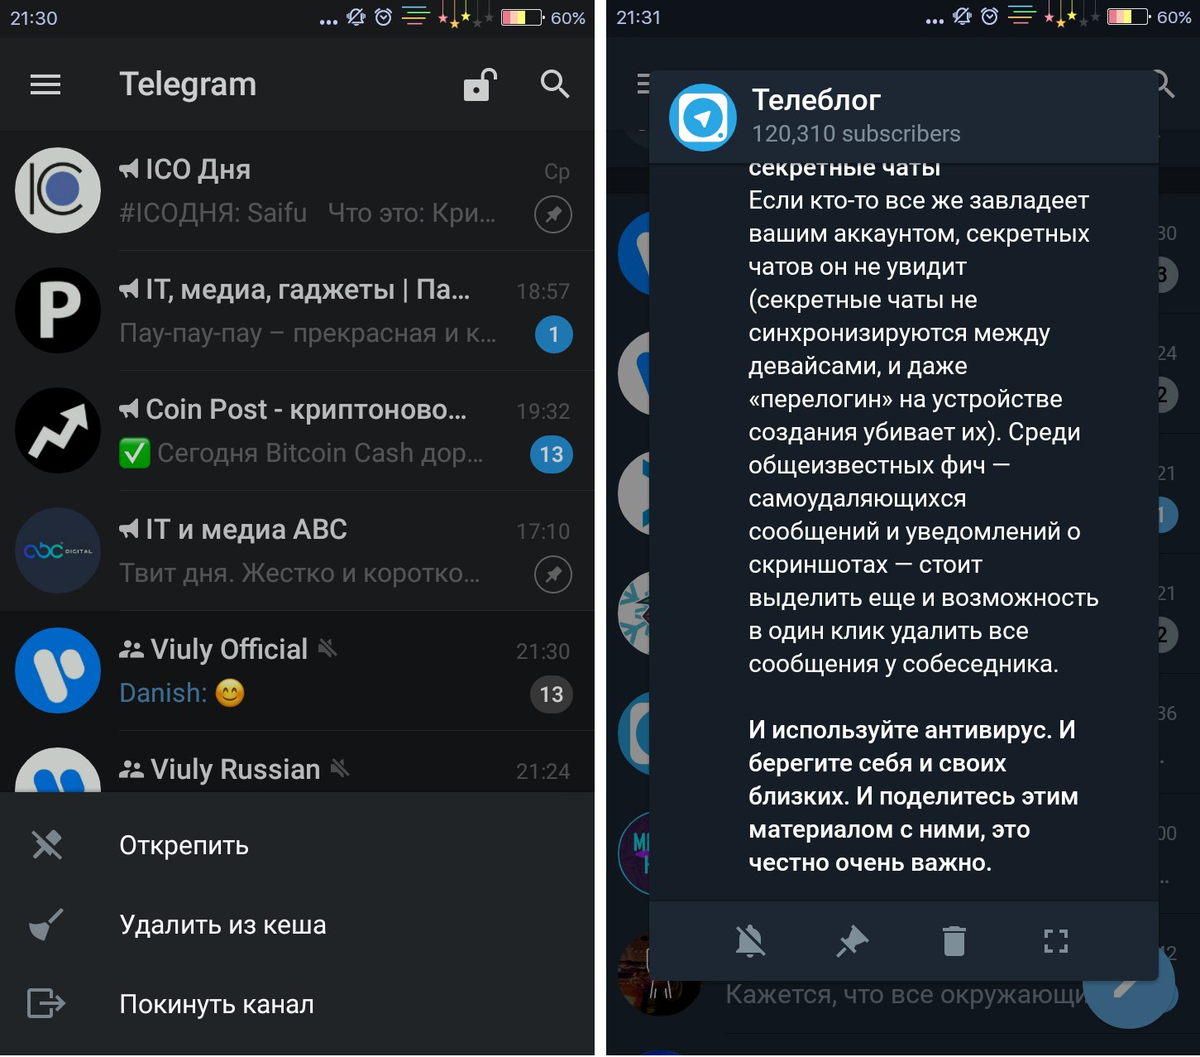 Телеграмм русская платформа или нет фото 106